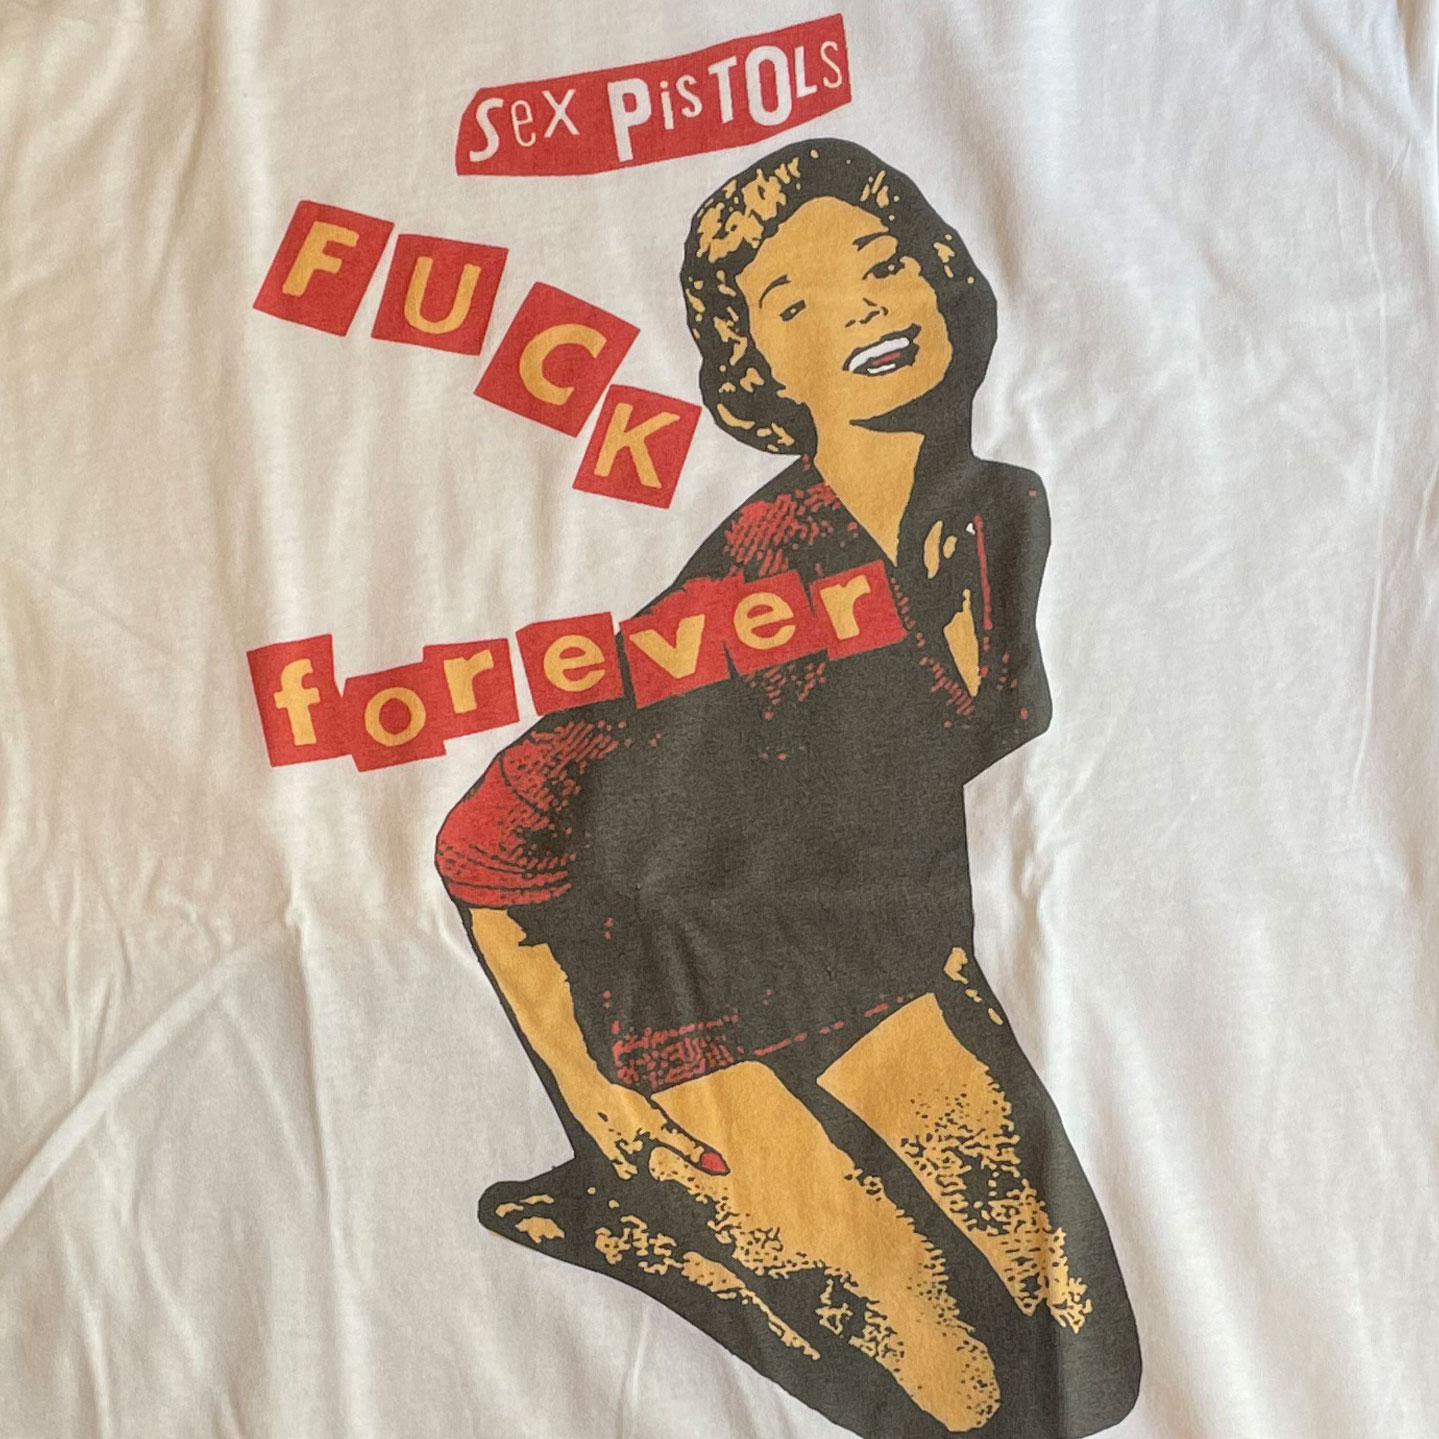 SEX PISTOLS Tシャツ FUCK FOREVER